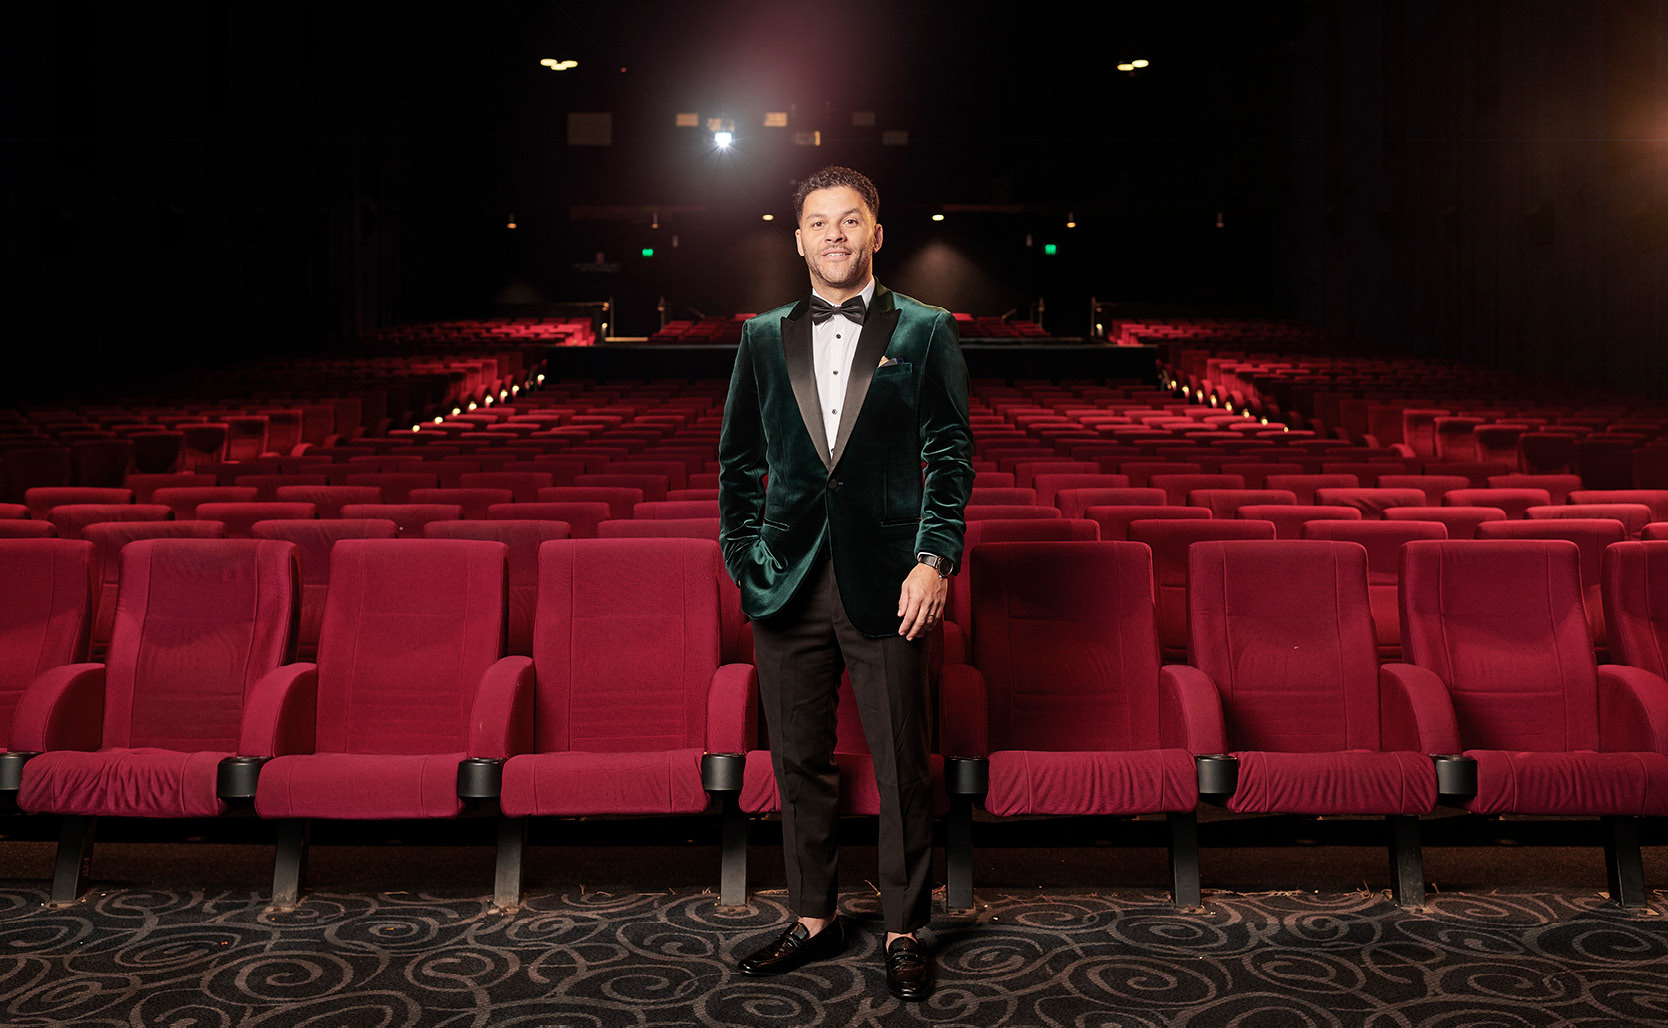 Kid Mac standing in cinema surrounded by red seats, wearing POLITIX velvet green tuxedo